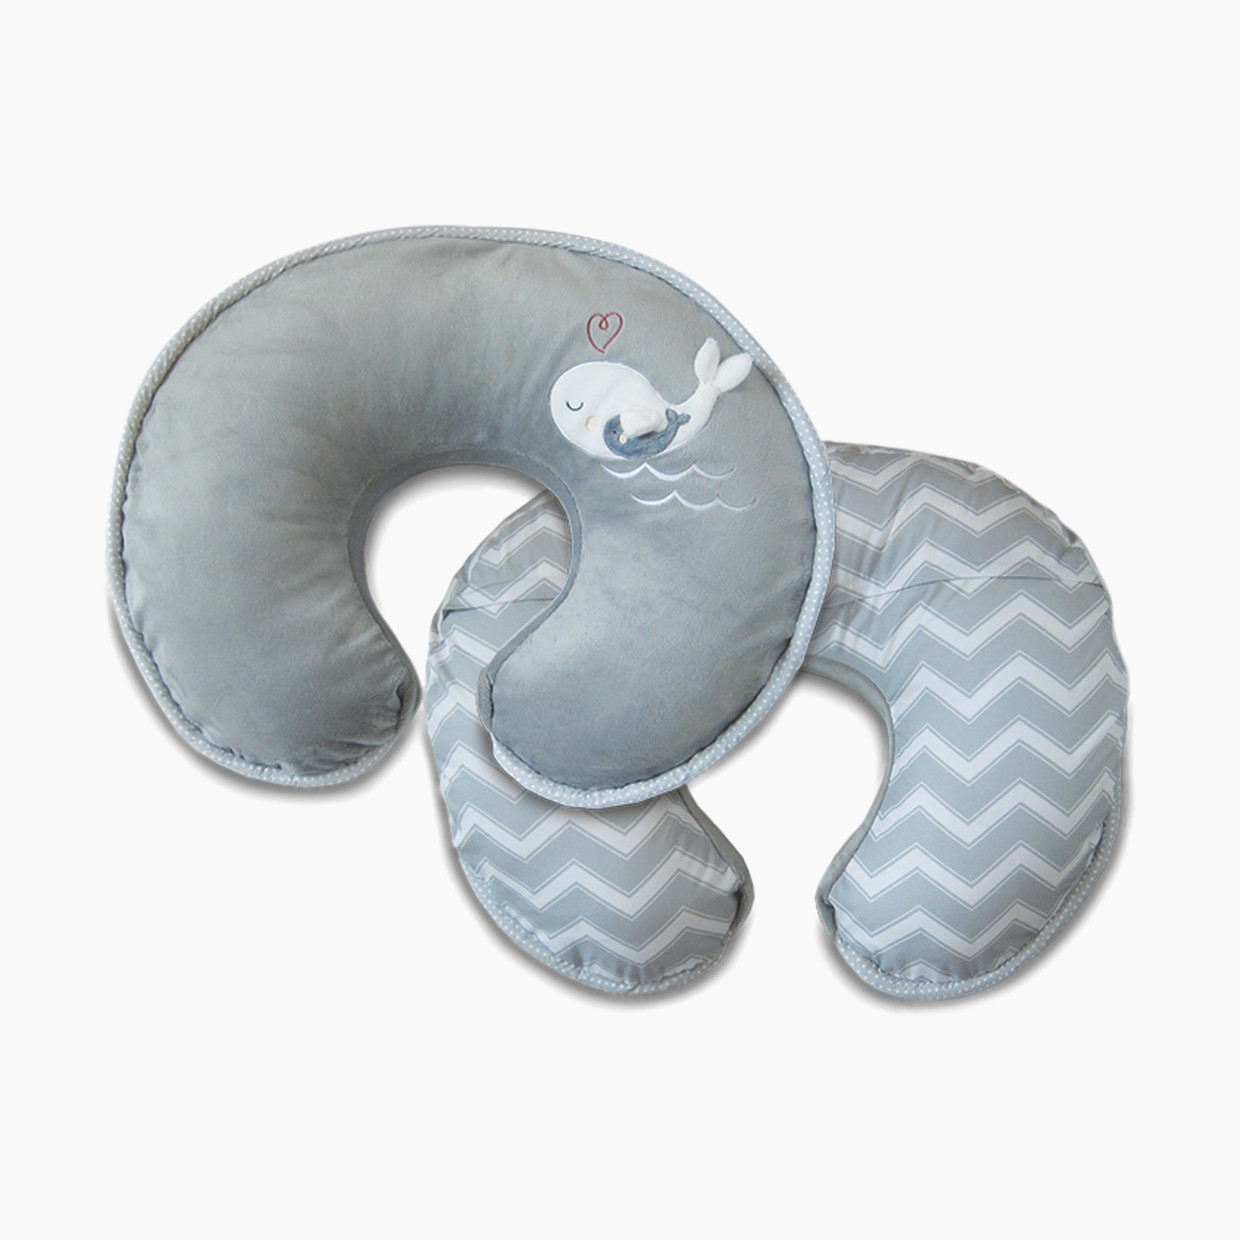 Boppy Luxe Support Nursing Pillow - Gray Chevron Whales.